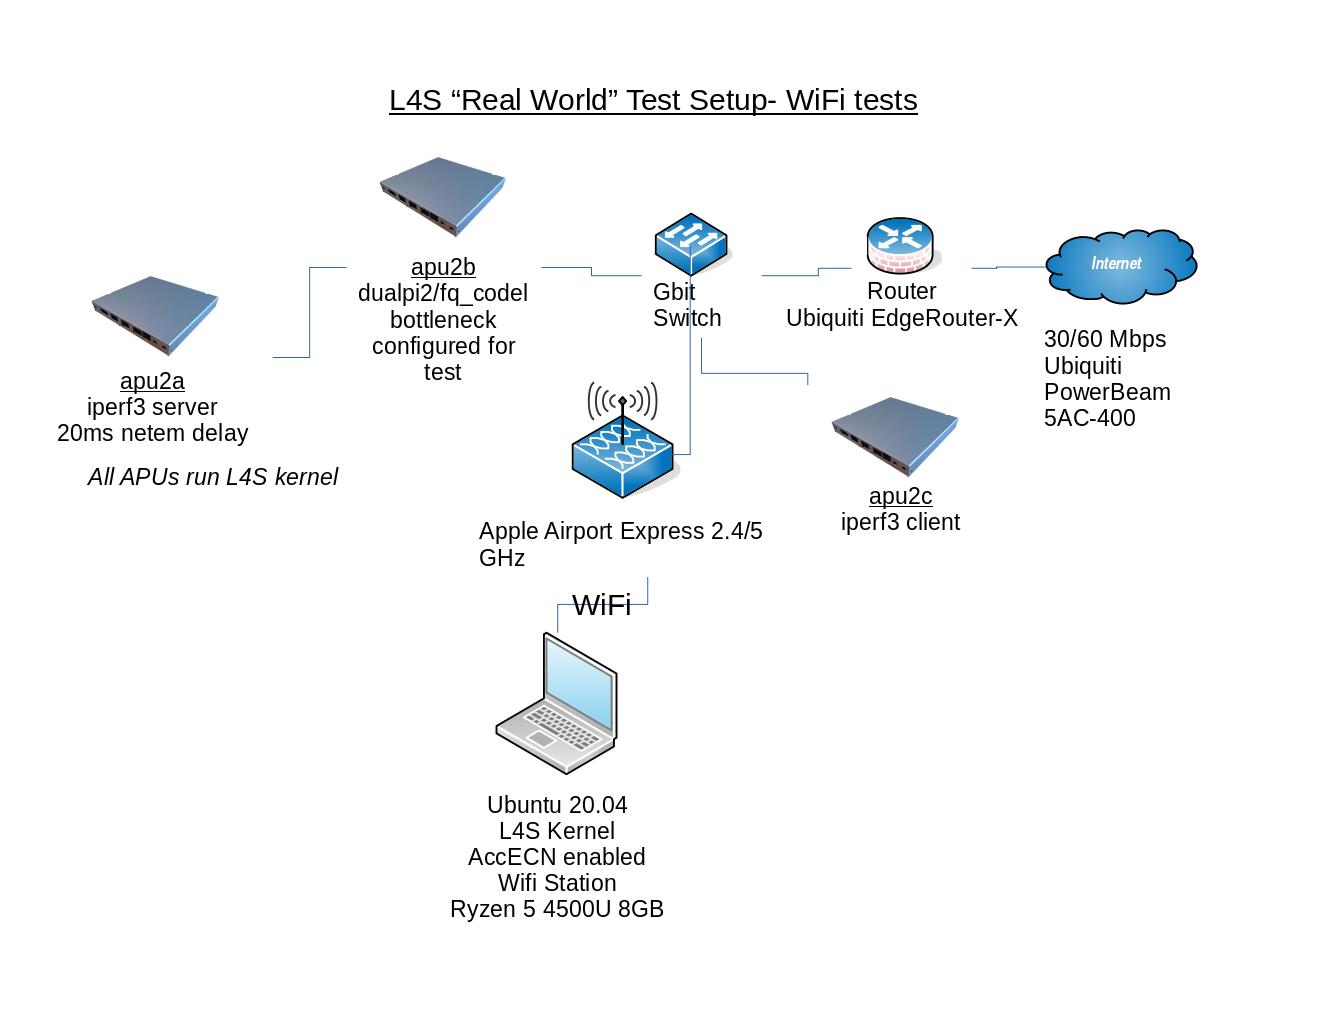 Diagram of Real World WiFi Test Setup